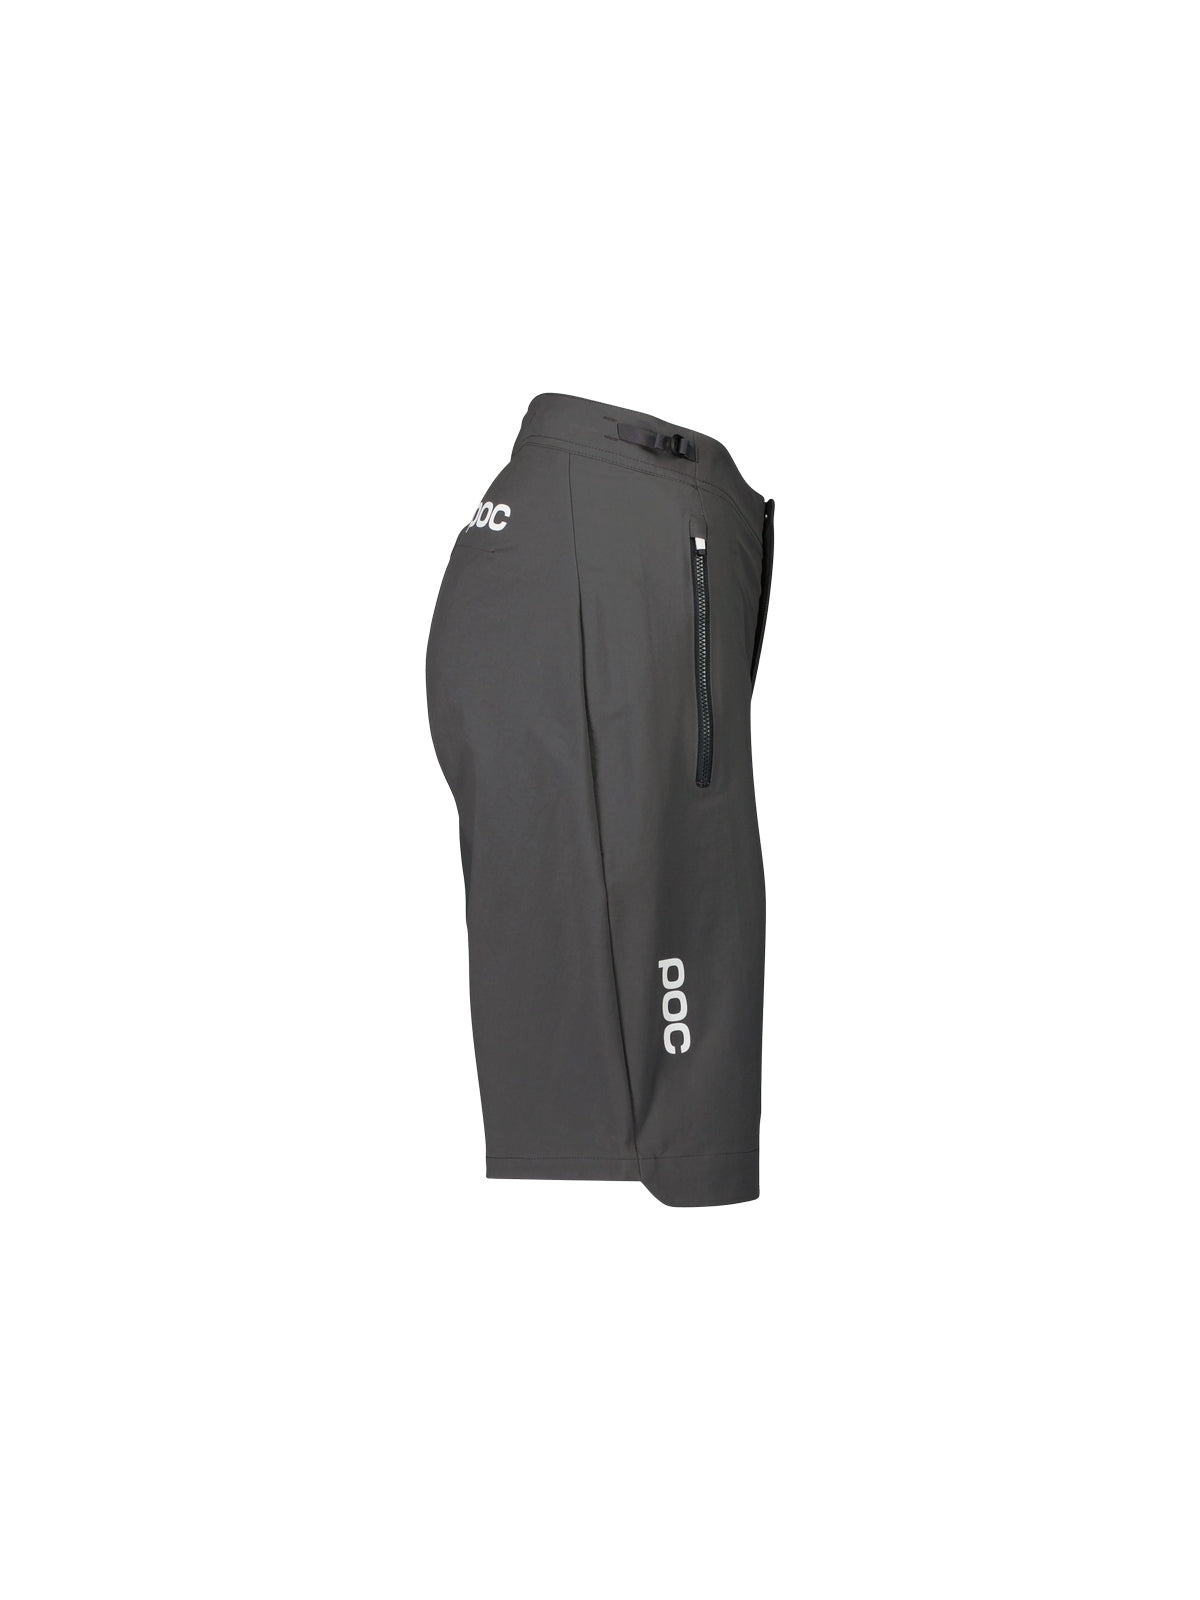 Spodenki rowerowe POC W's Essential Enduro Shorts - Sylvanite Grey